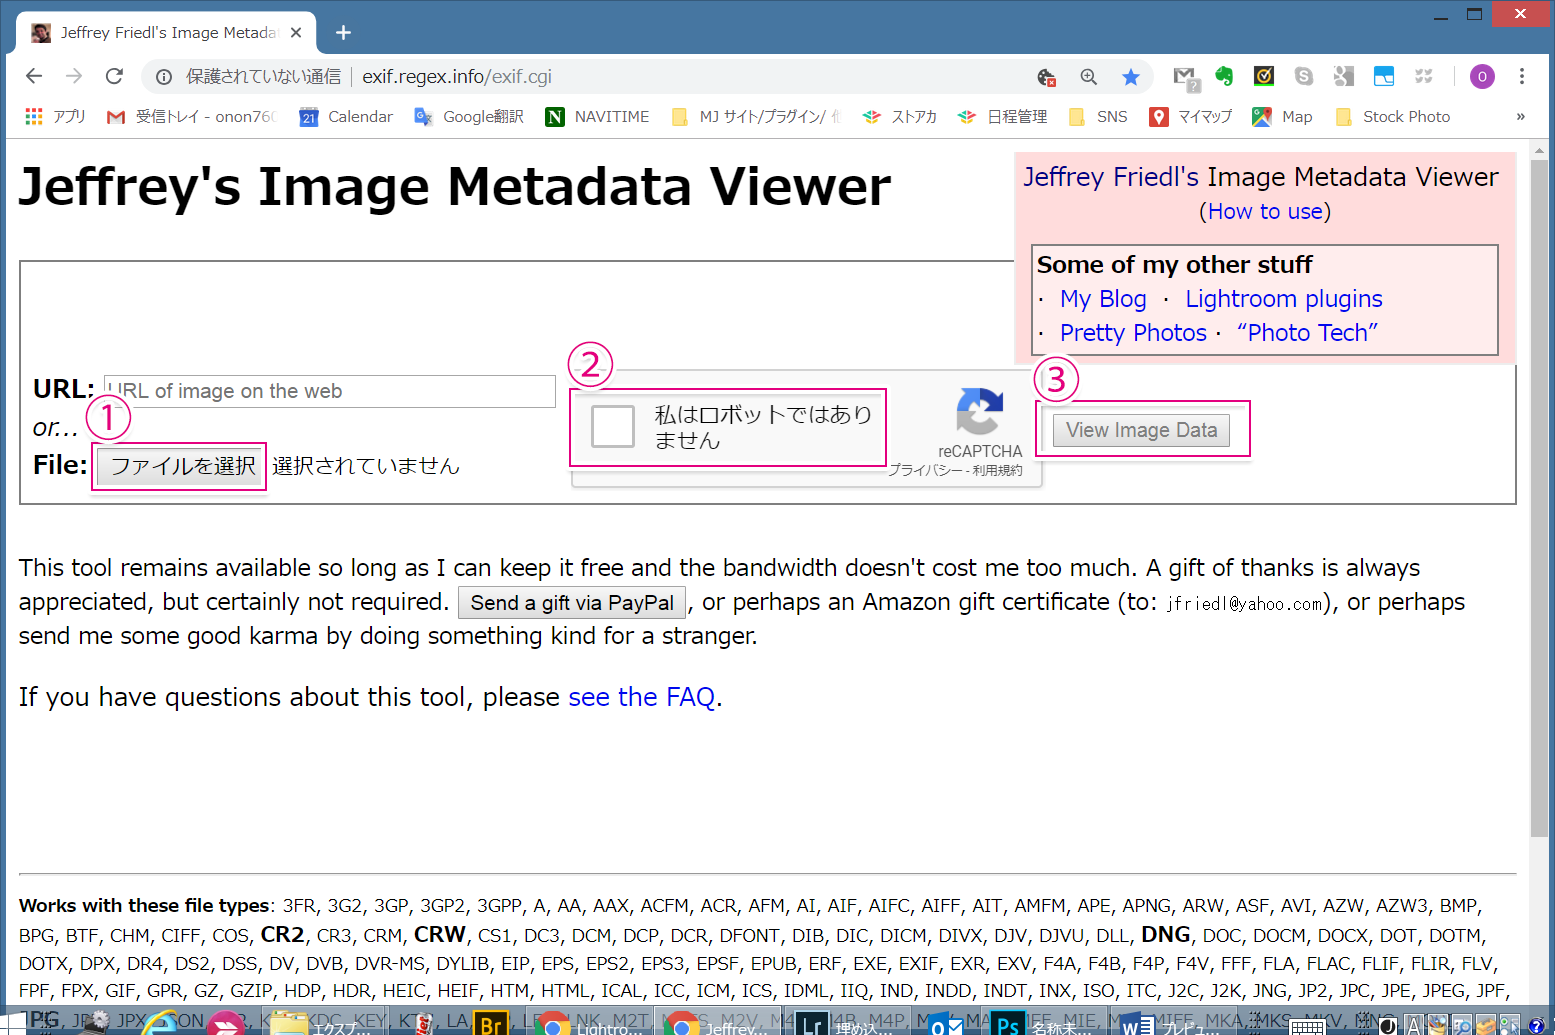 image metadata viewer